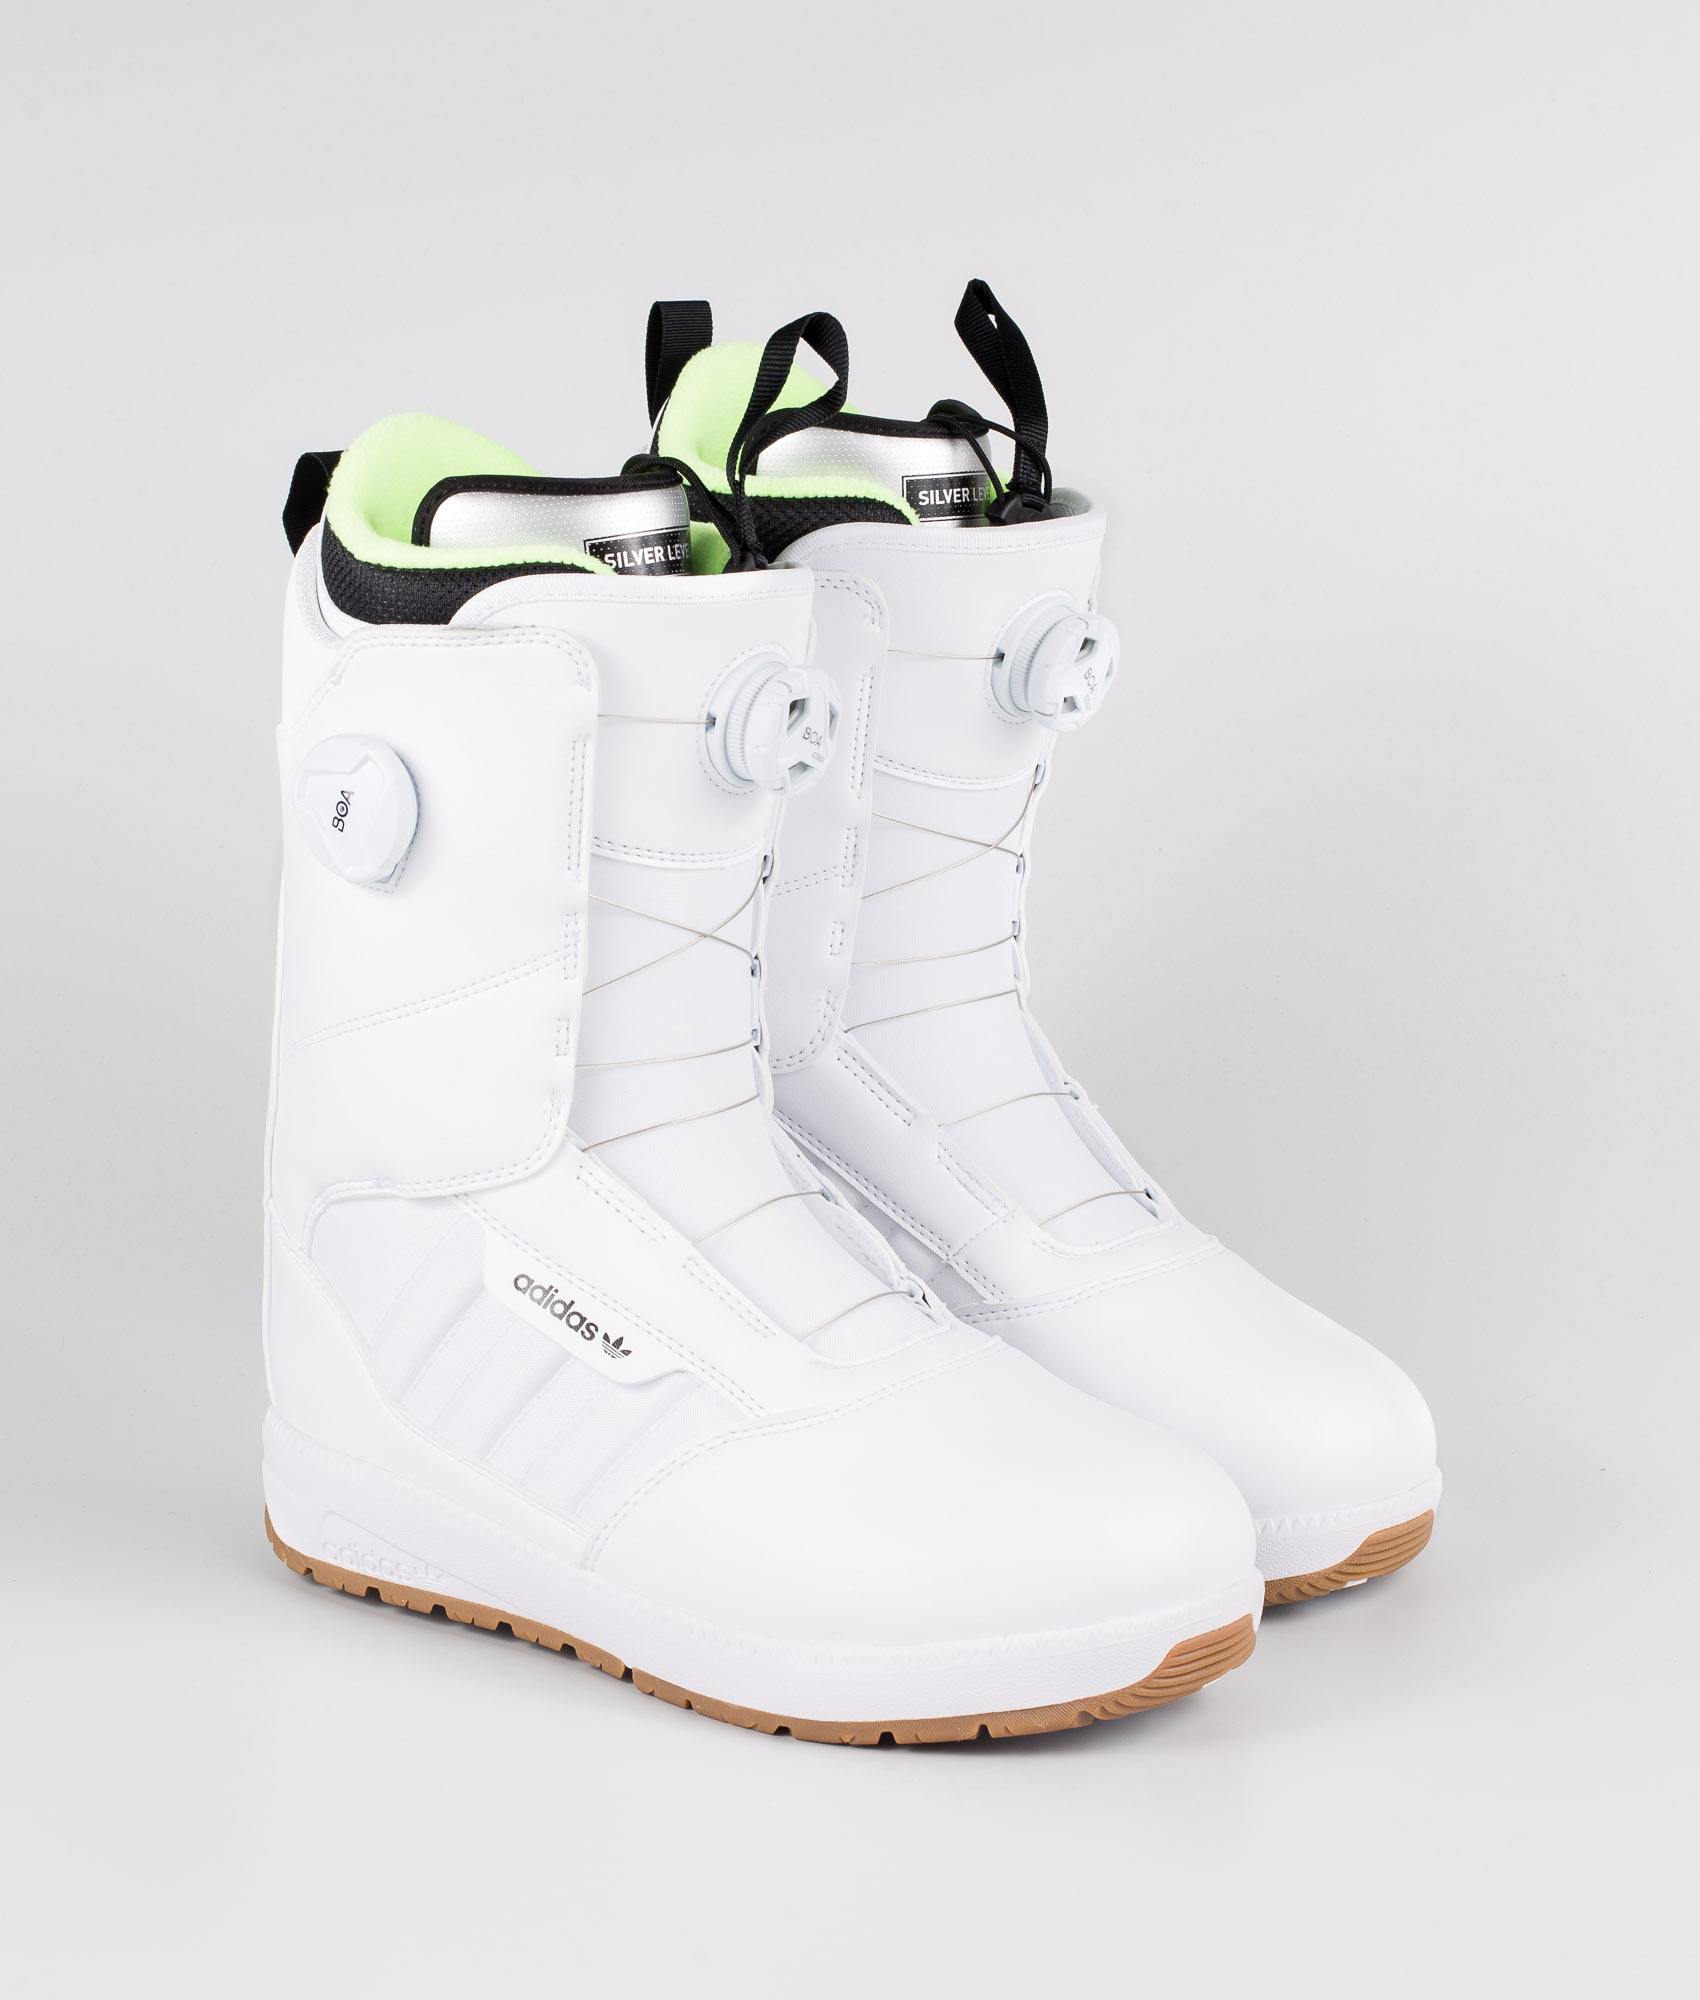 adidas womens snowboard boots